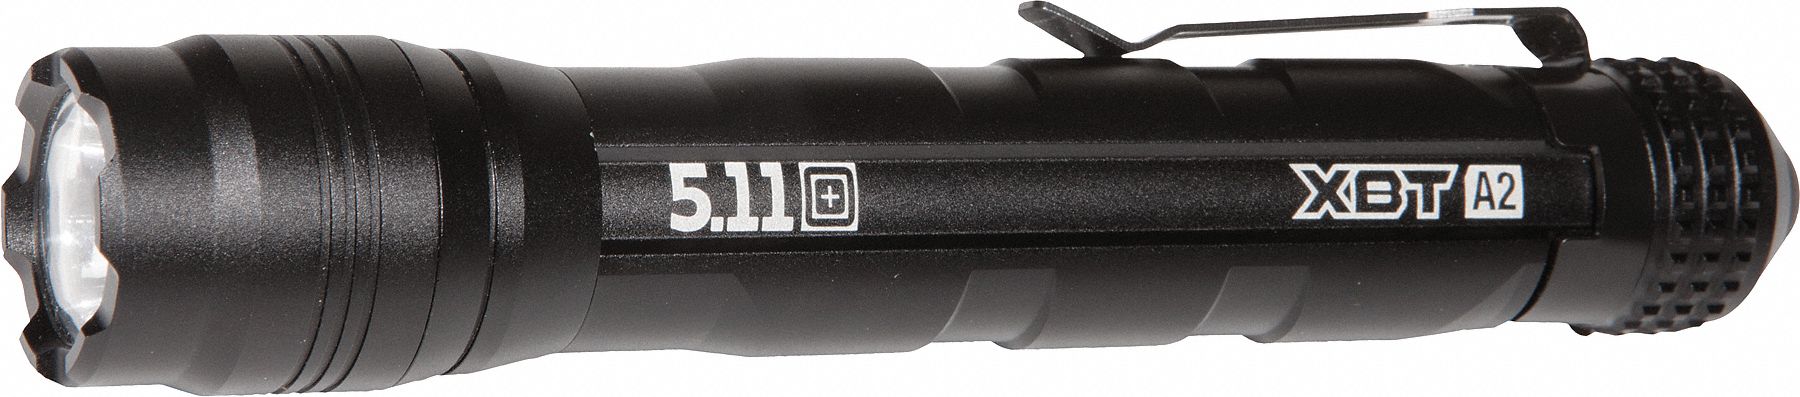 Battery Flashlight,Cree XP-GB LED,AA,2